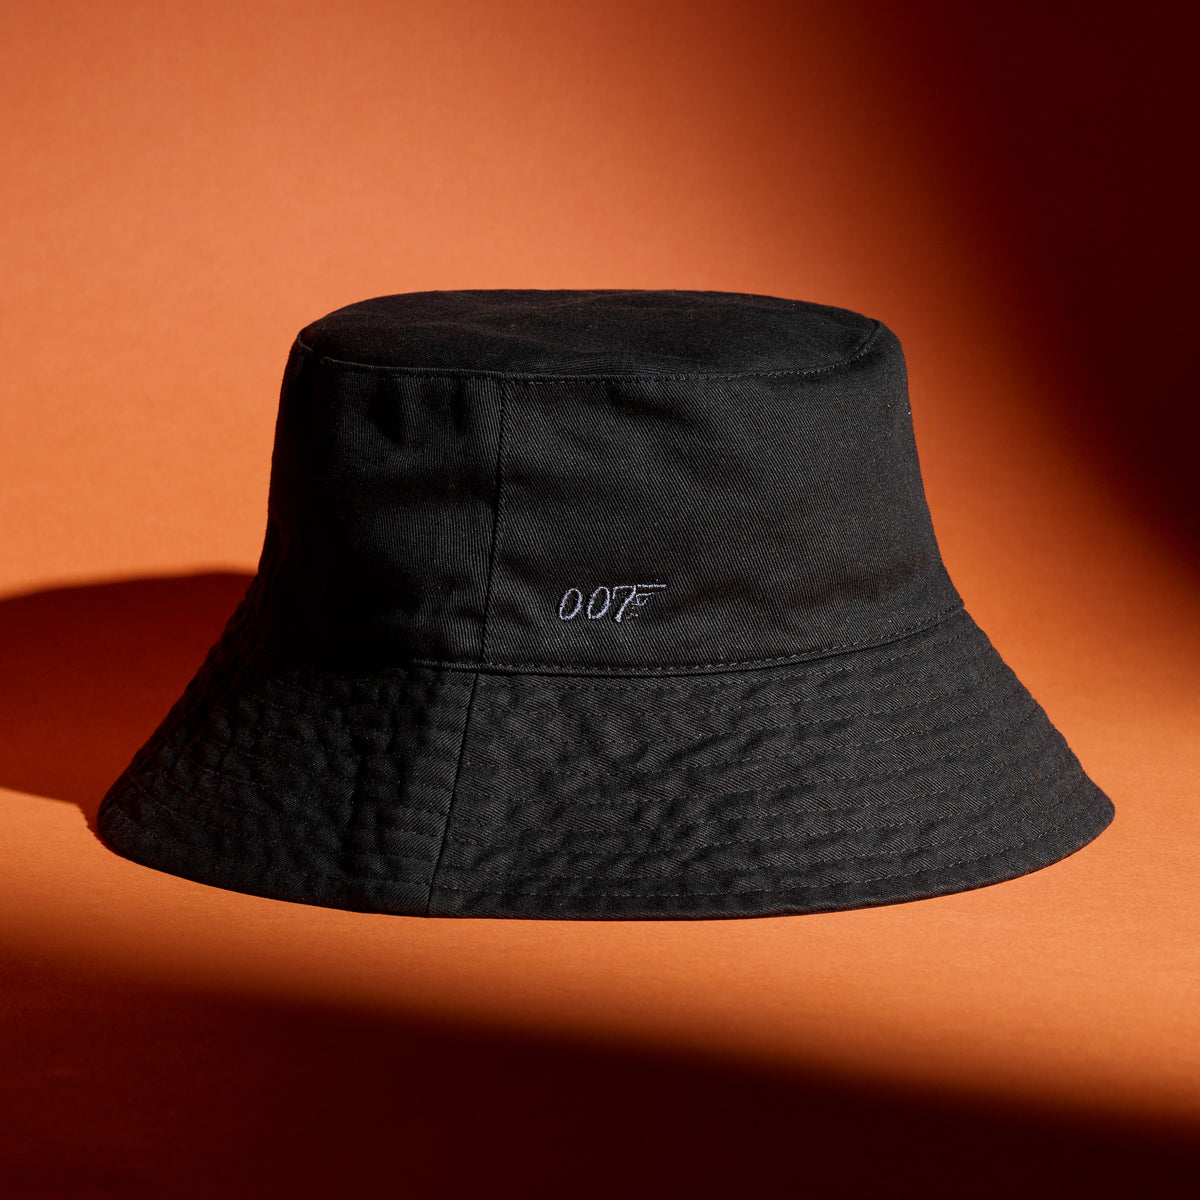 James Bond 007 Embroidered Cotton Twill Bucket Hat - Black Edition